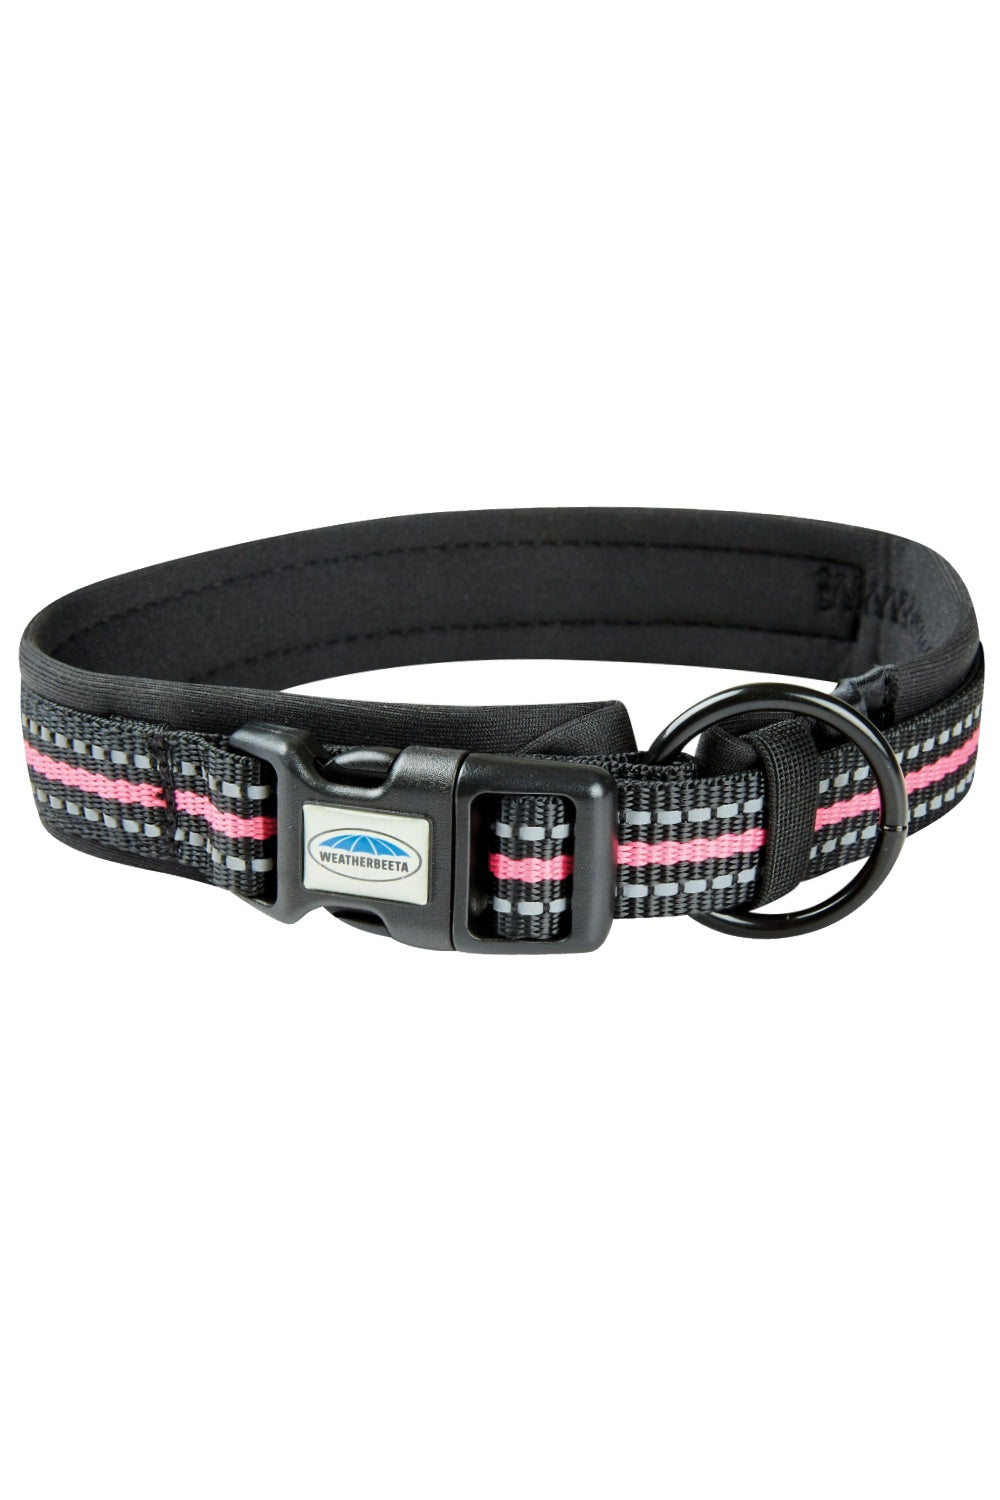 WeatherBeeta Reflective Dog Collar in Black/Pink 